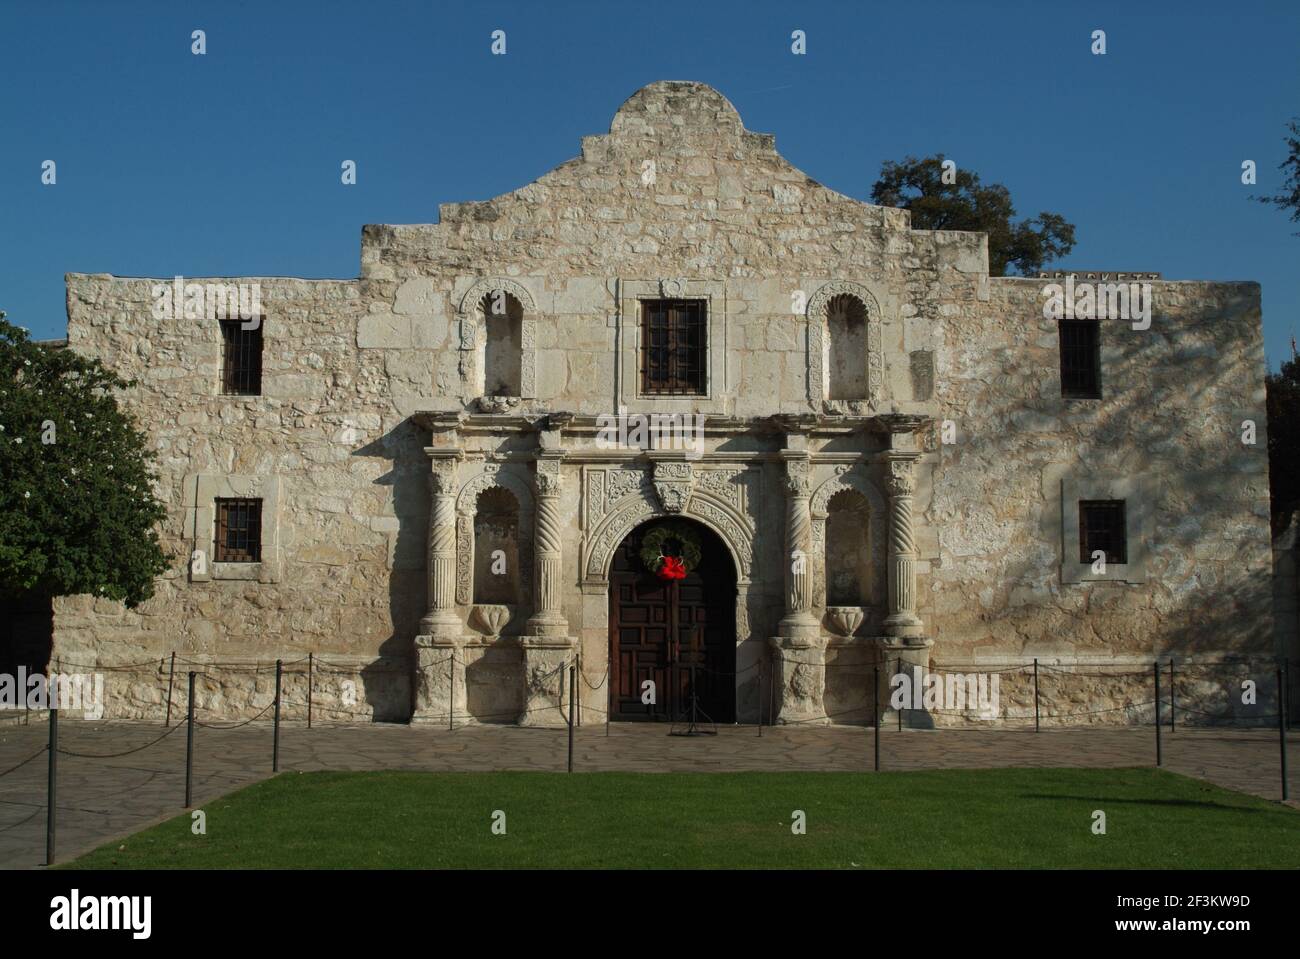 The Alamo Mission, Ort der berühmten Schlacht in der Texas Revolution, Februar-März 1836, San Antonio, Texas, USA Stockfoto